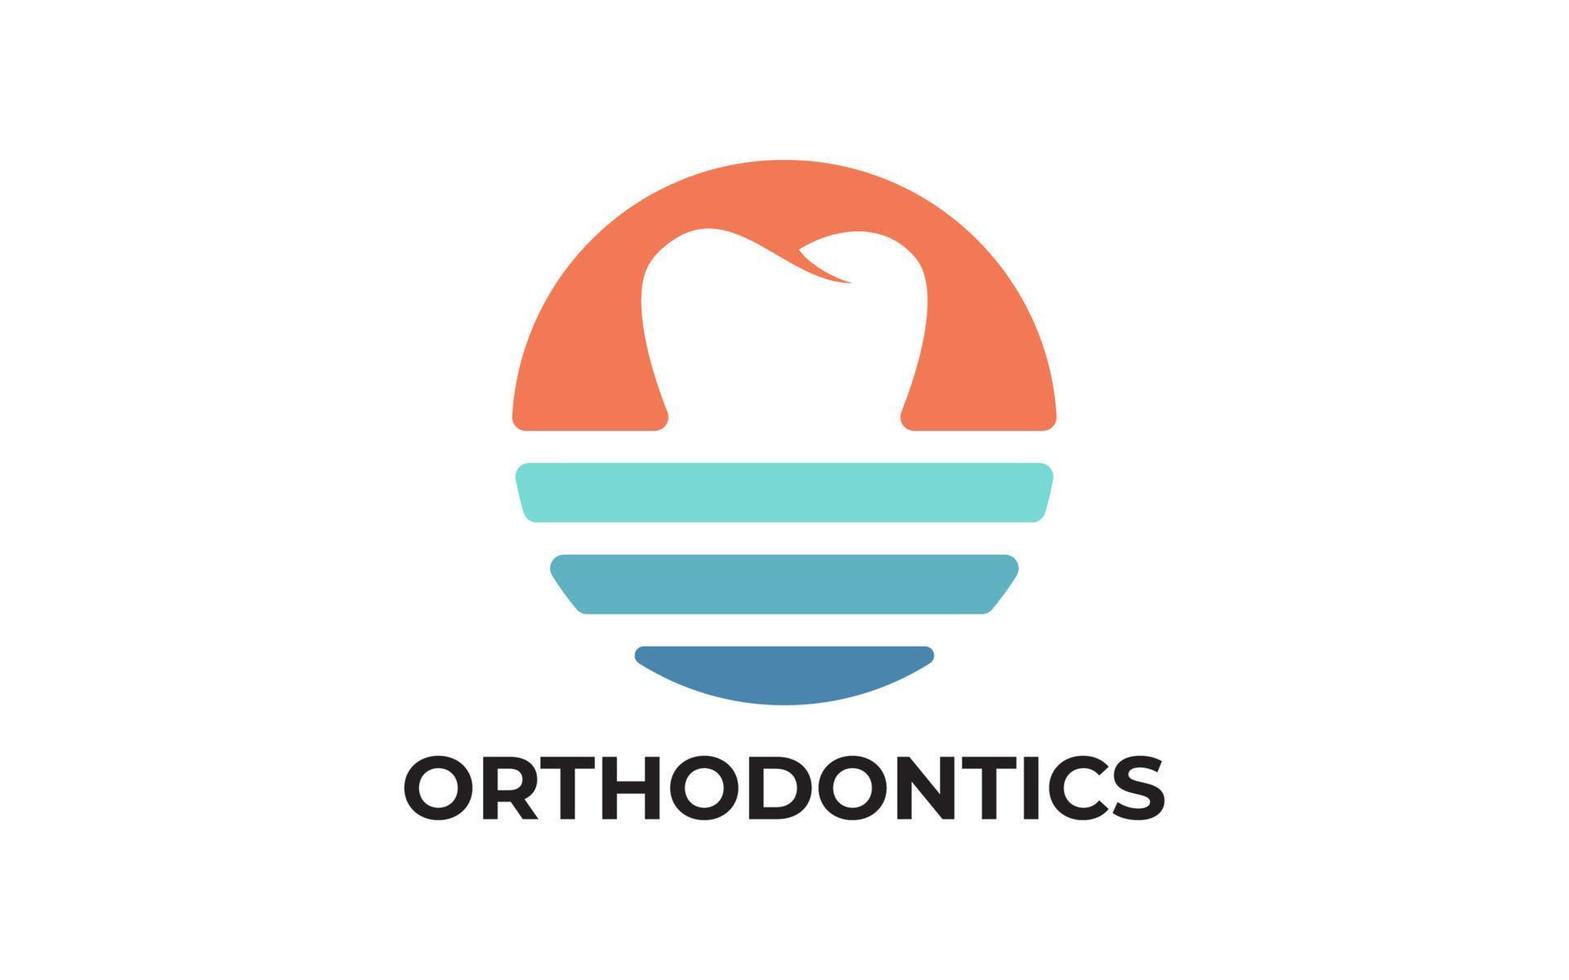 Medical dental teeth orthodontic logo design vector template